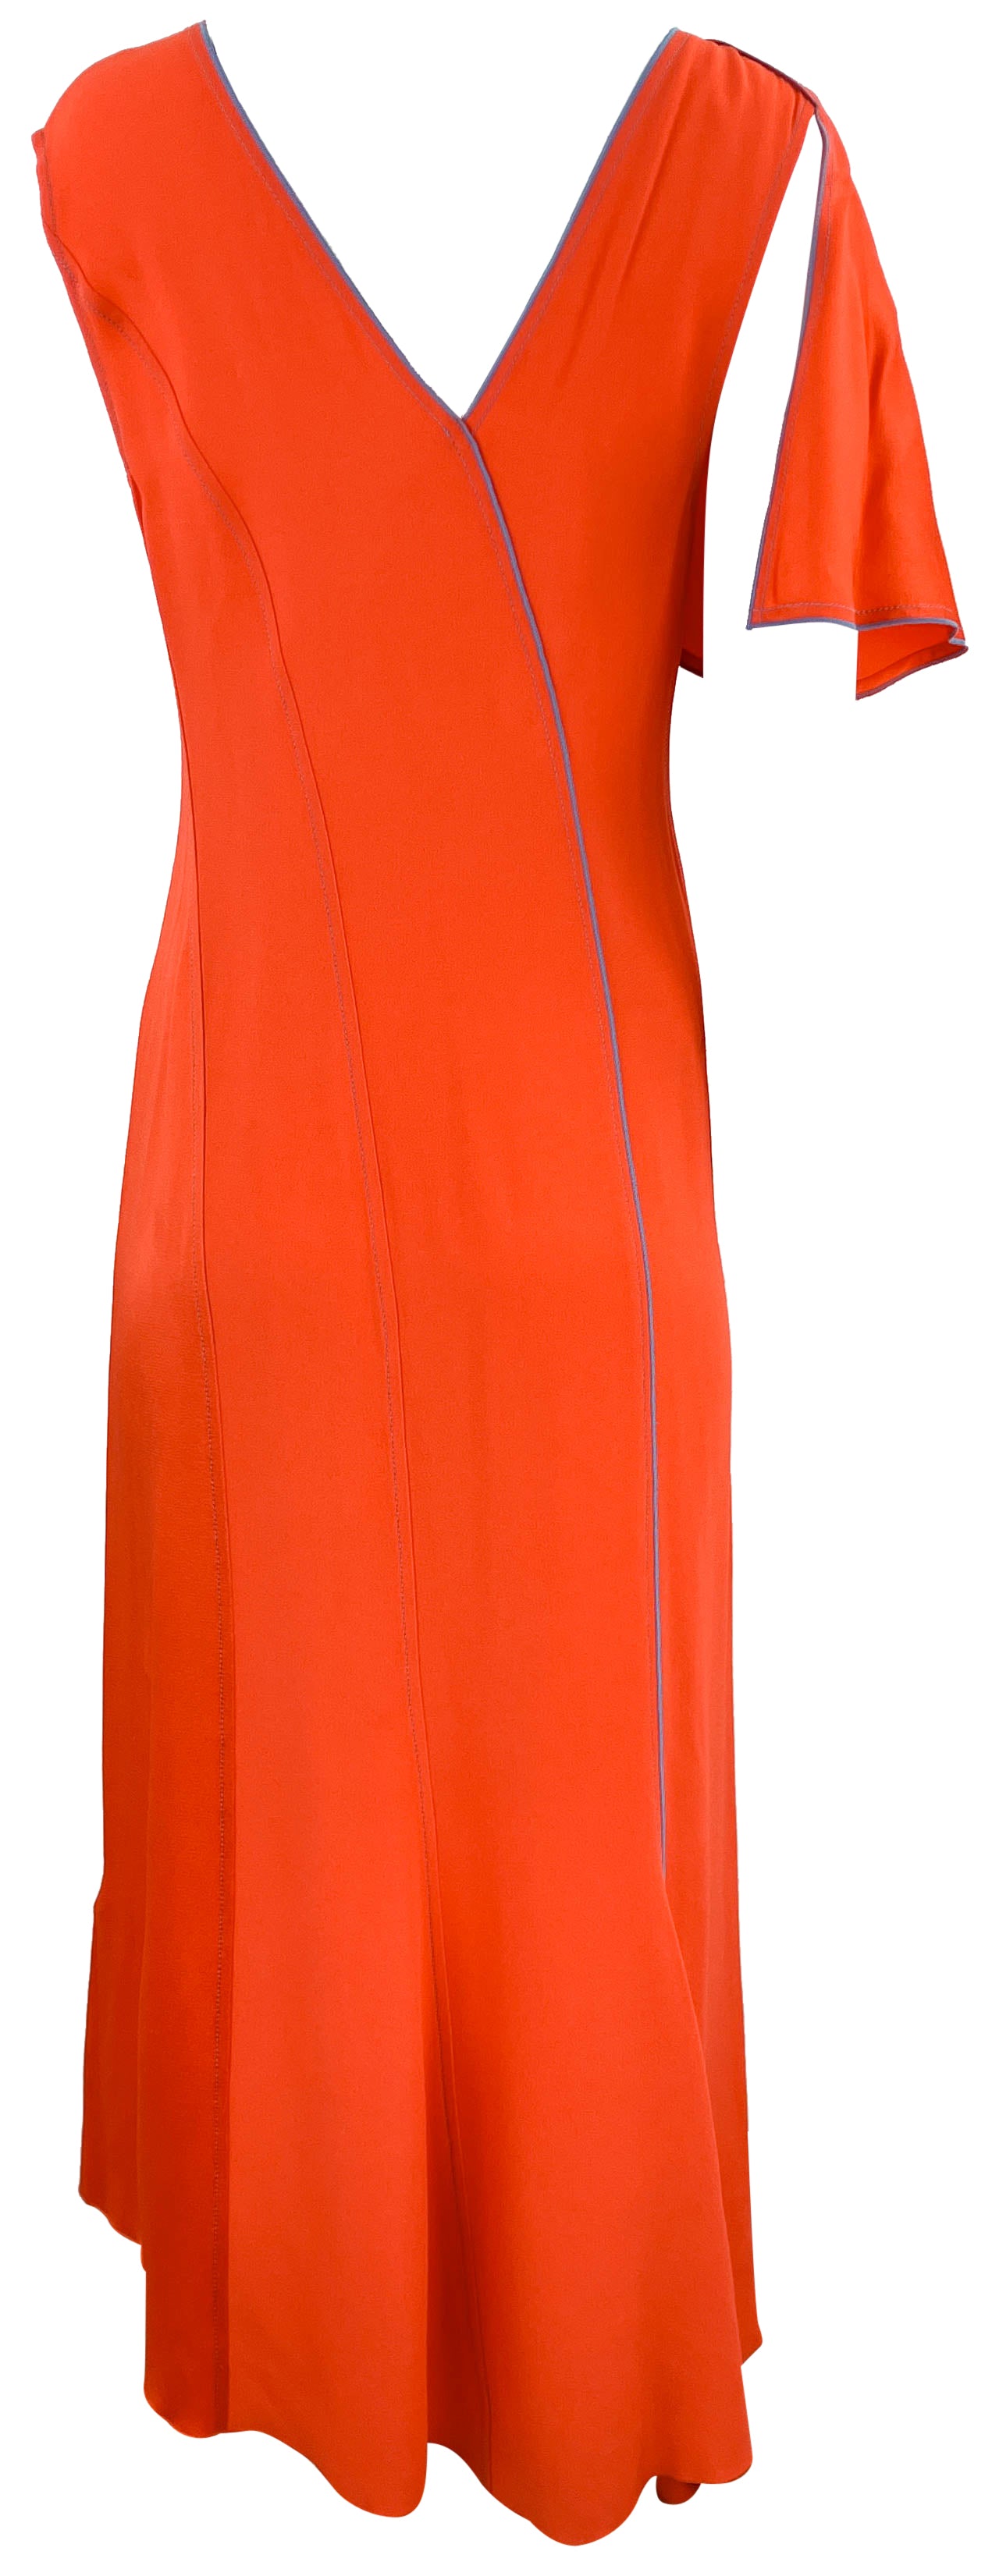 Victoria Beckham Asymmetric Midi Dress in Red-Orange - Discounts on Victoria Beckham at UAL